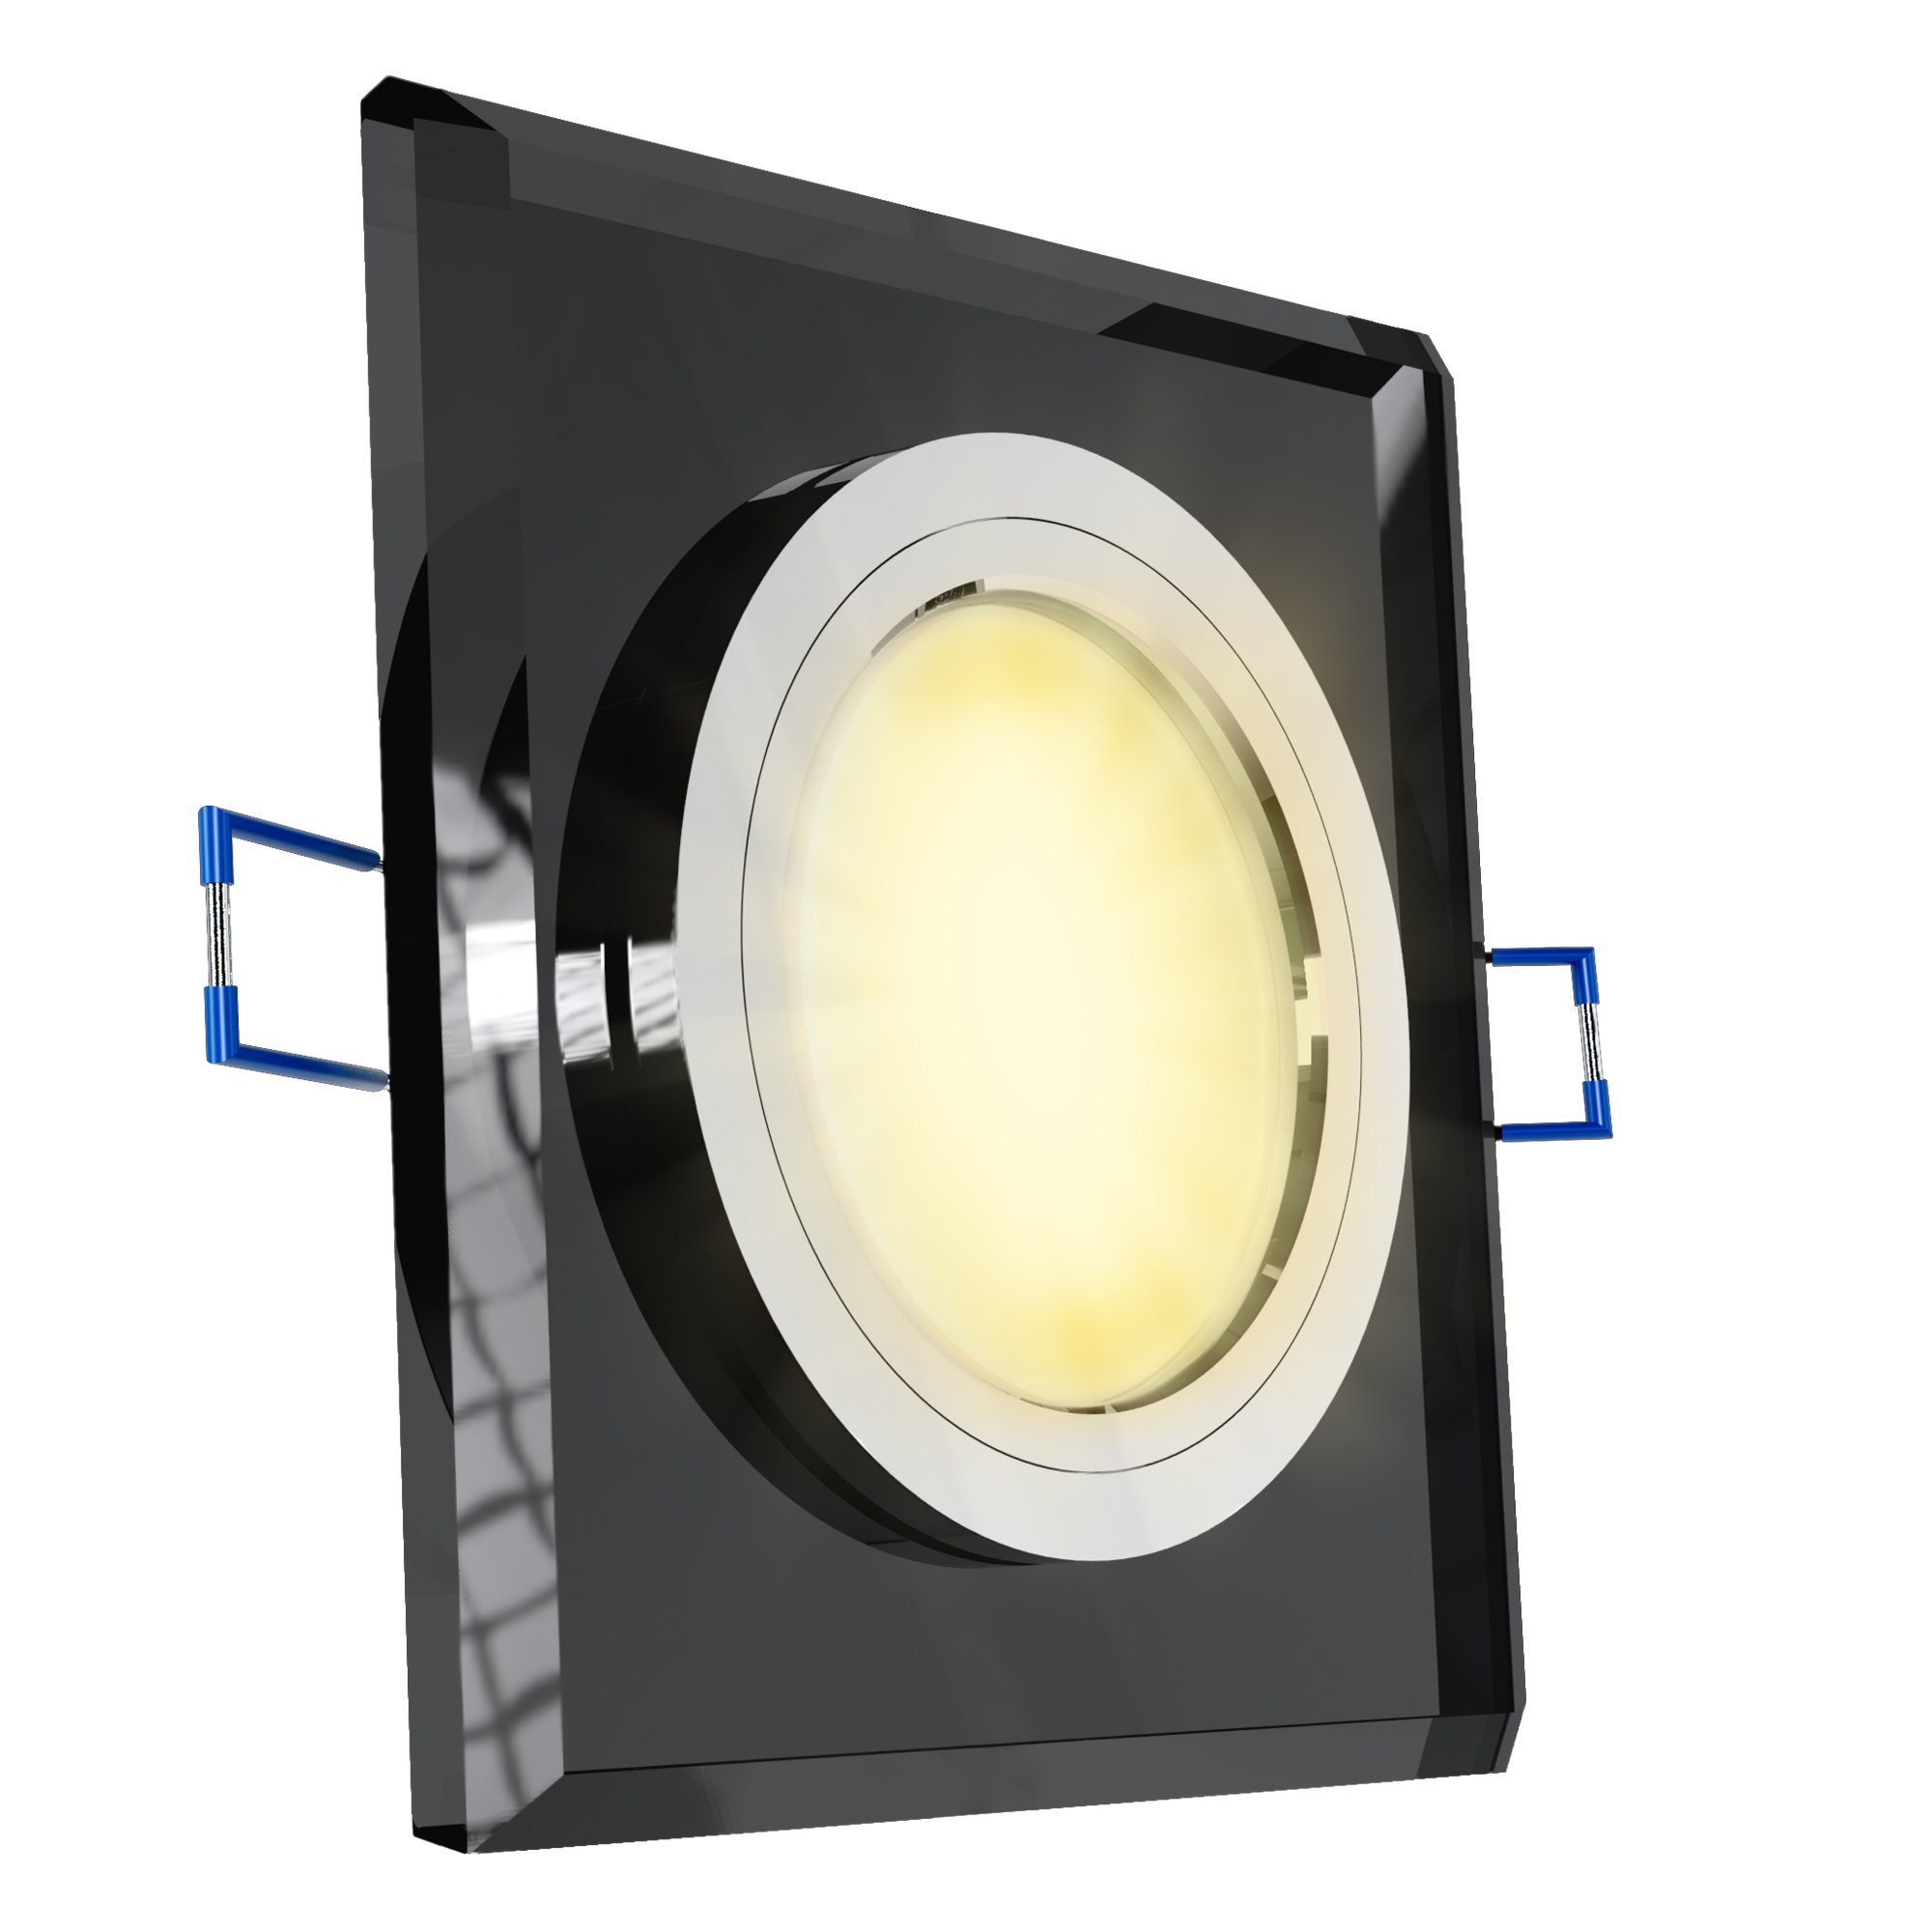 SSC-LUXon LED Einbaustrahler Flacher Glas LED Einbaustrahler dimmbar eckig schwarz mit LED Modul, Warmweiß